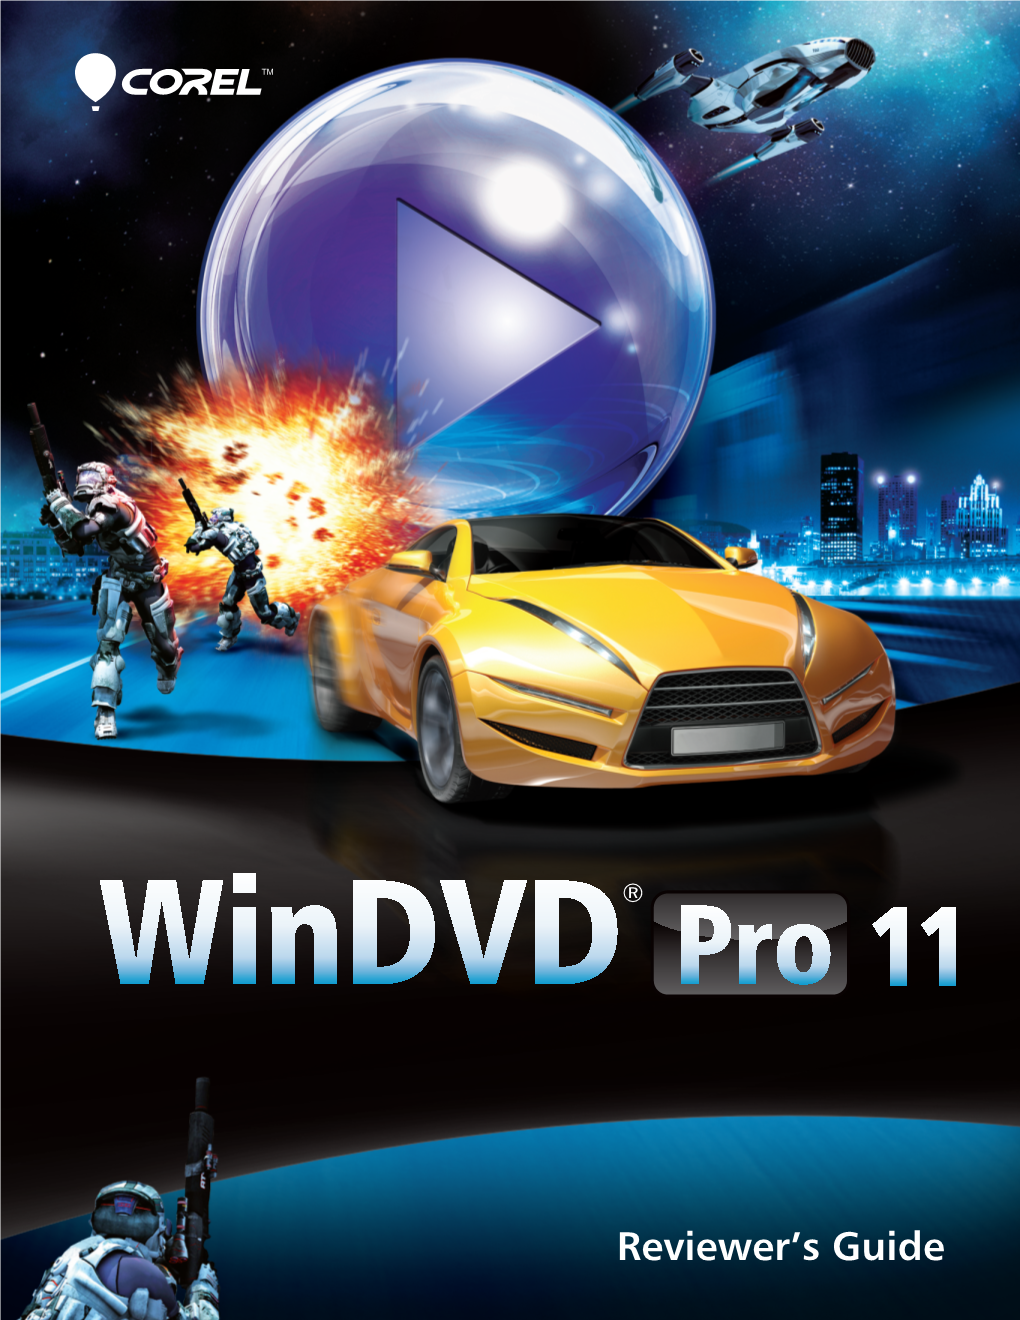 Corel Windvd Pro 11 Reviewer's Guide